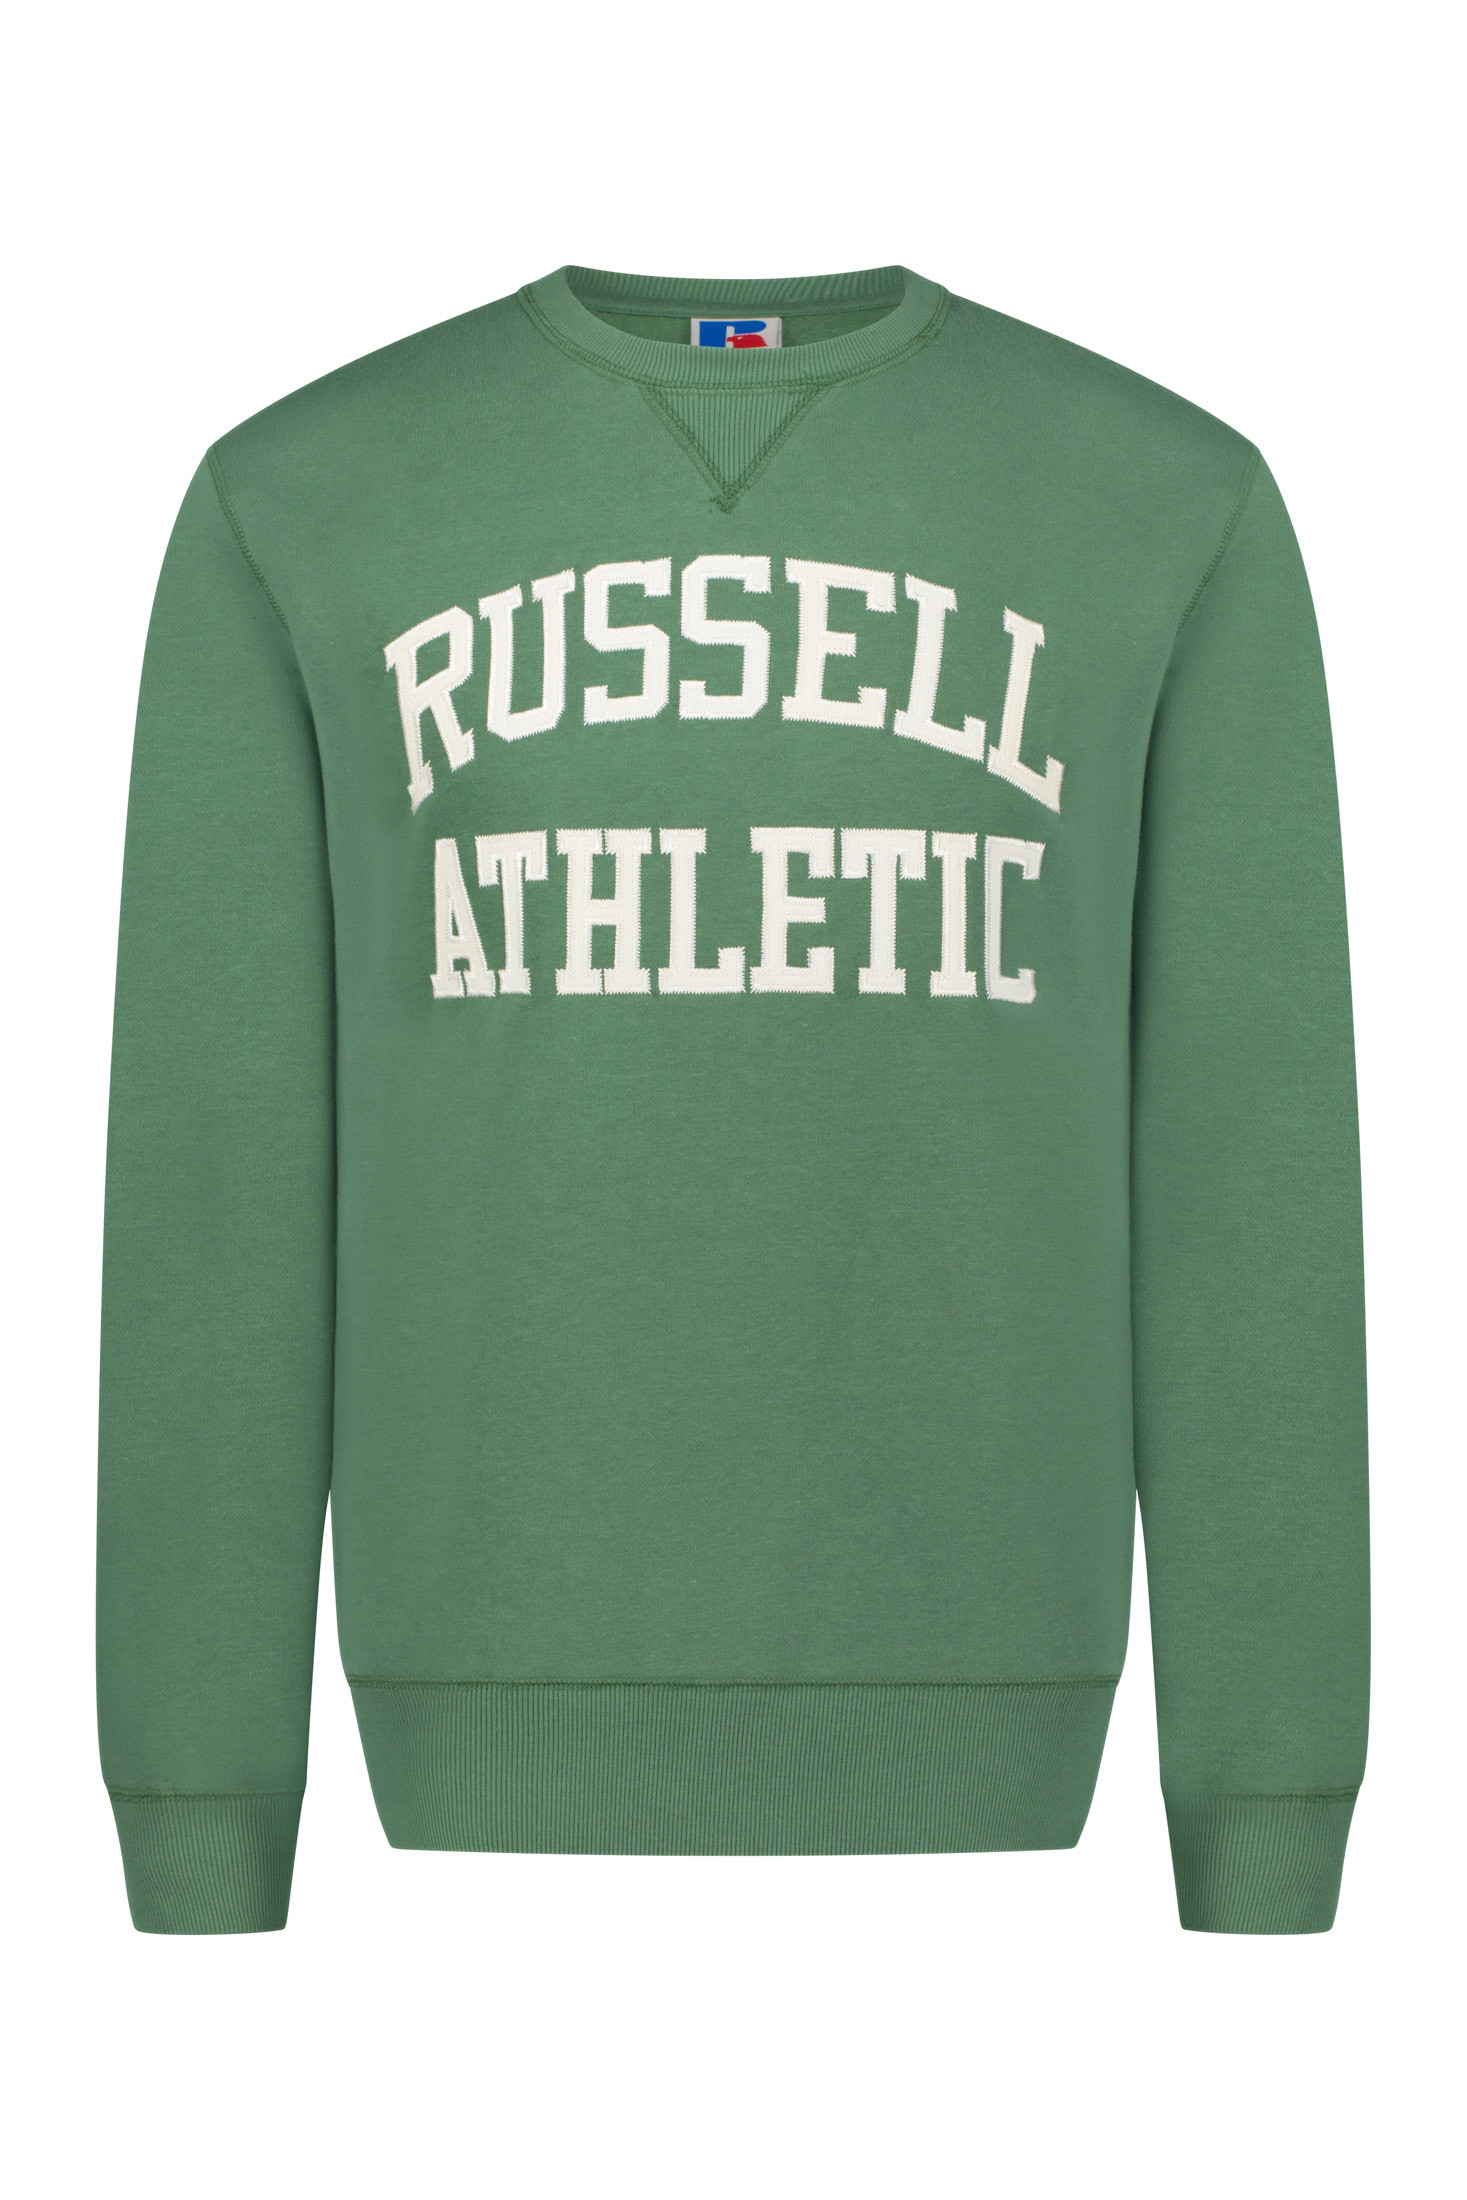 Russell Athletic - Felpa con ricamo, Verde chiaro, large image number 0